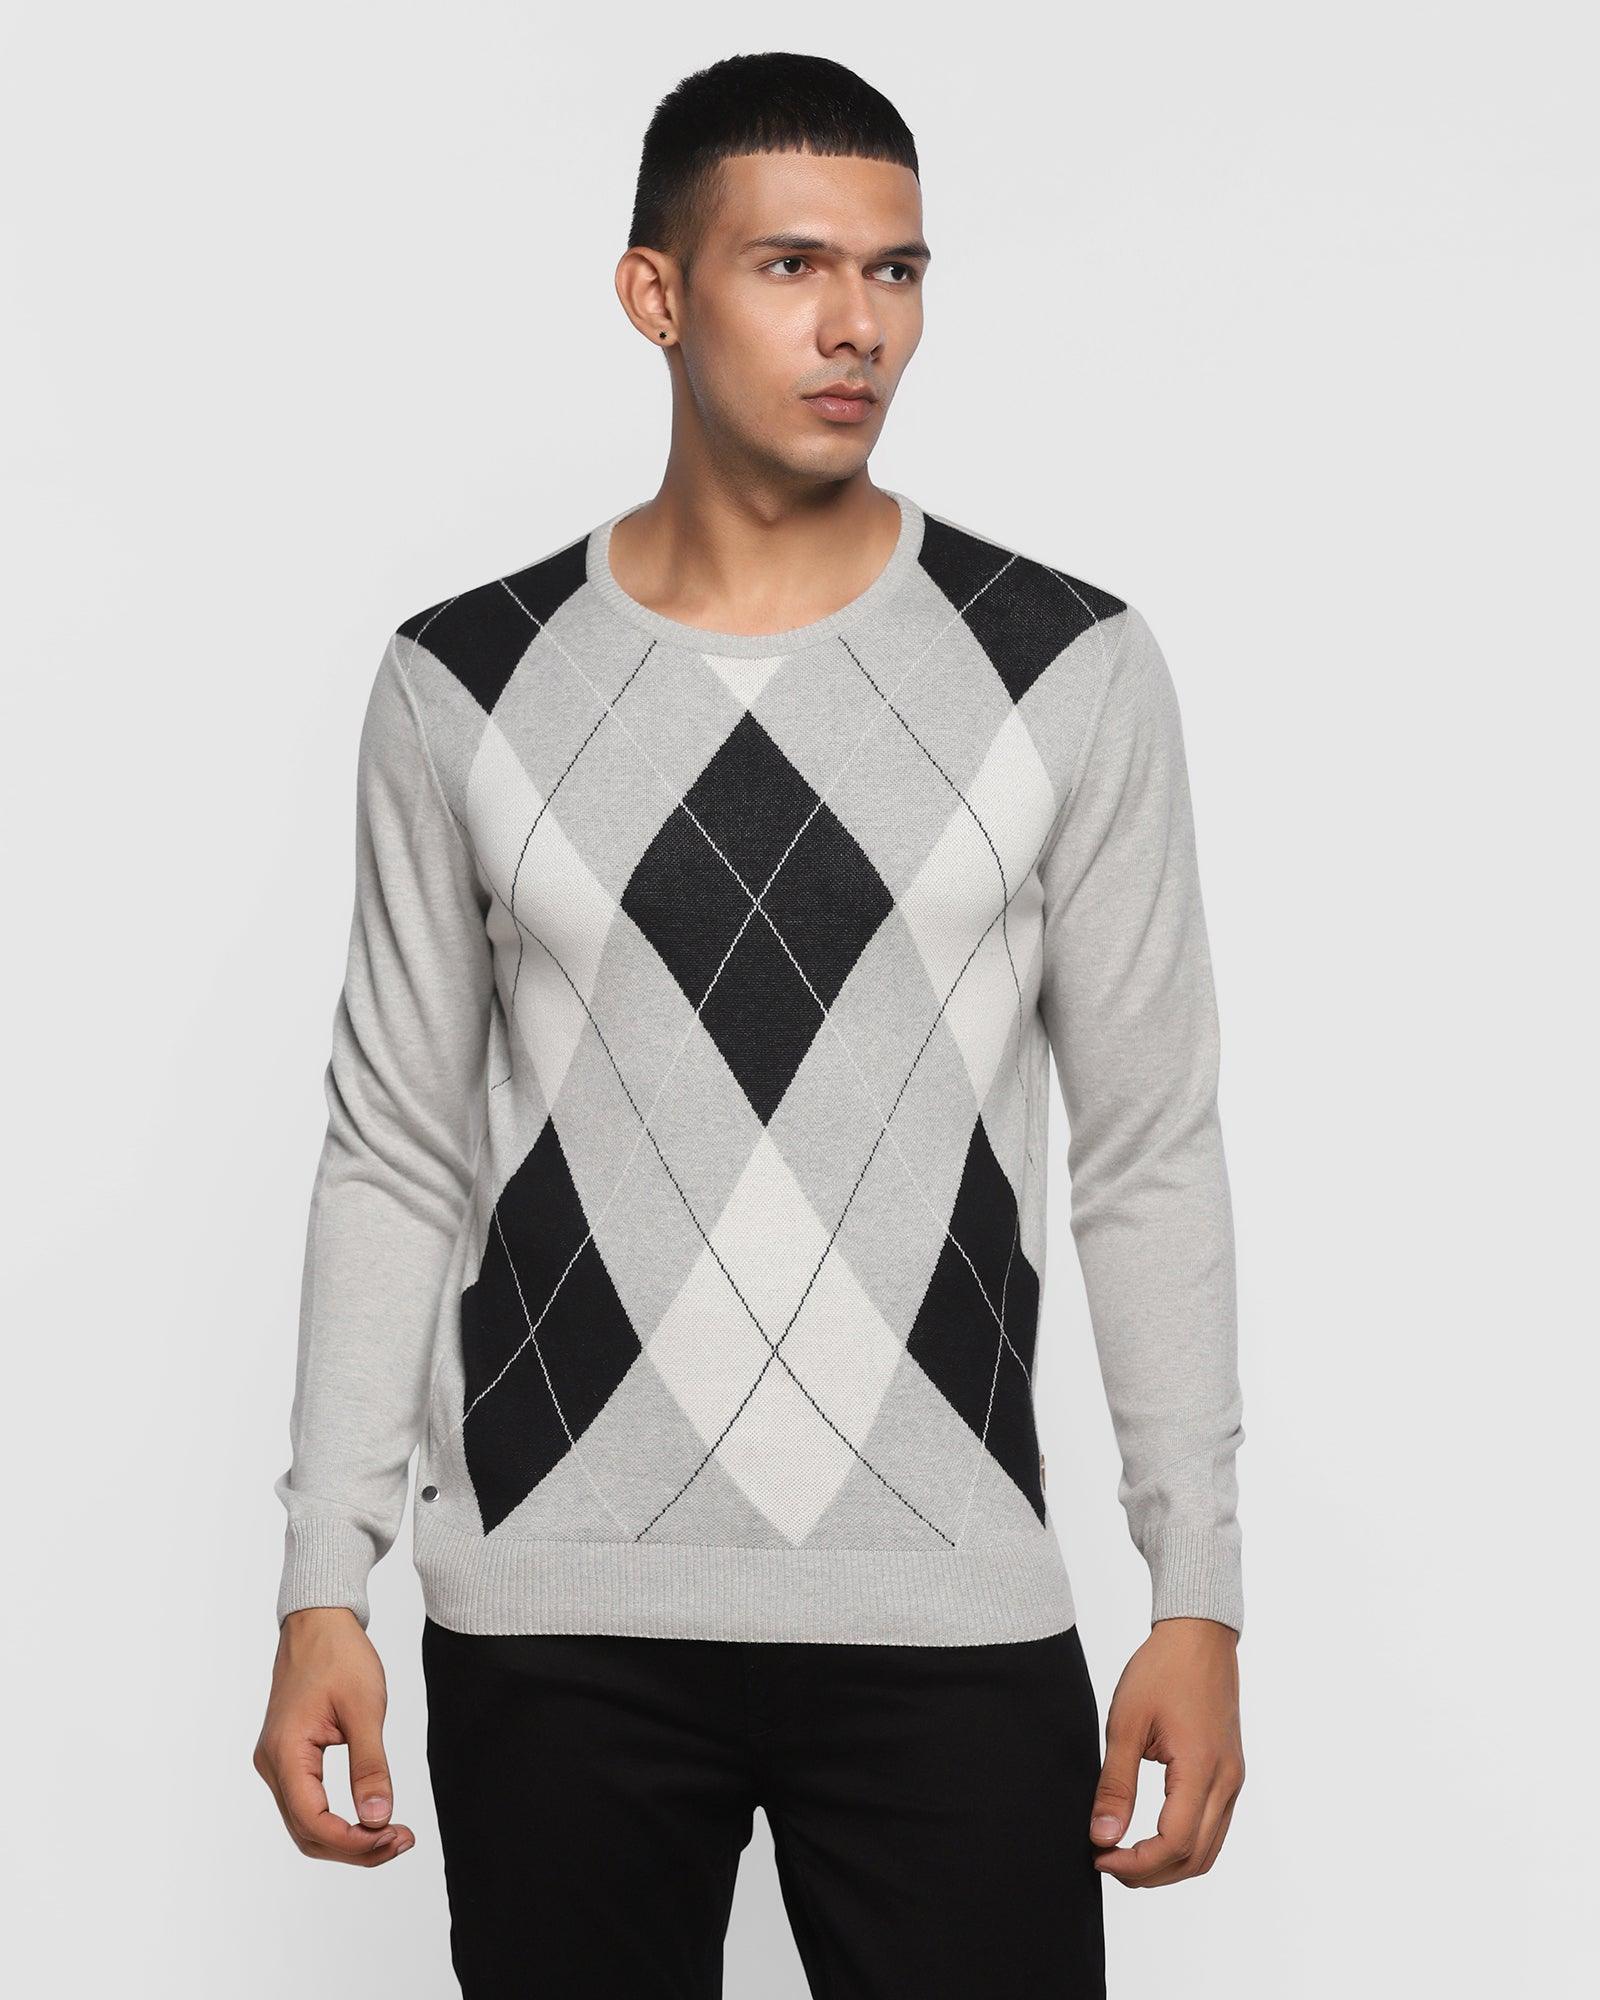 Crew Neck Grey Melange Printed Sweater - Gail